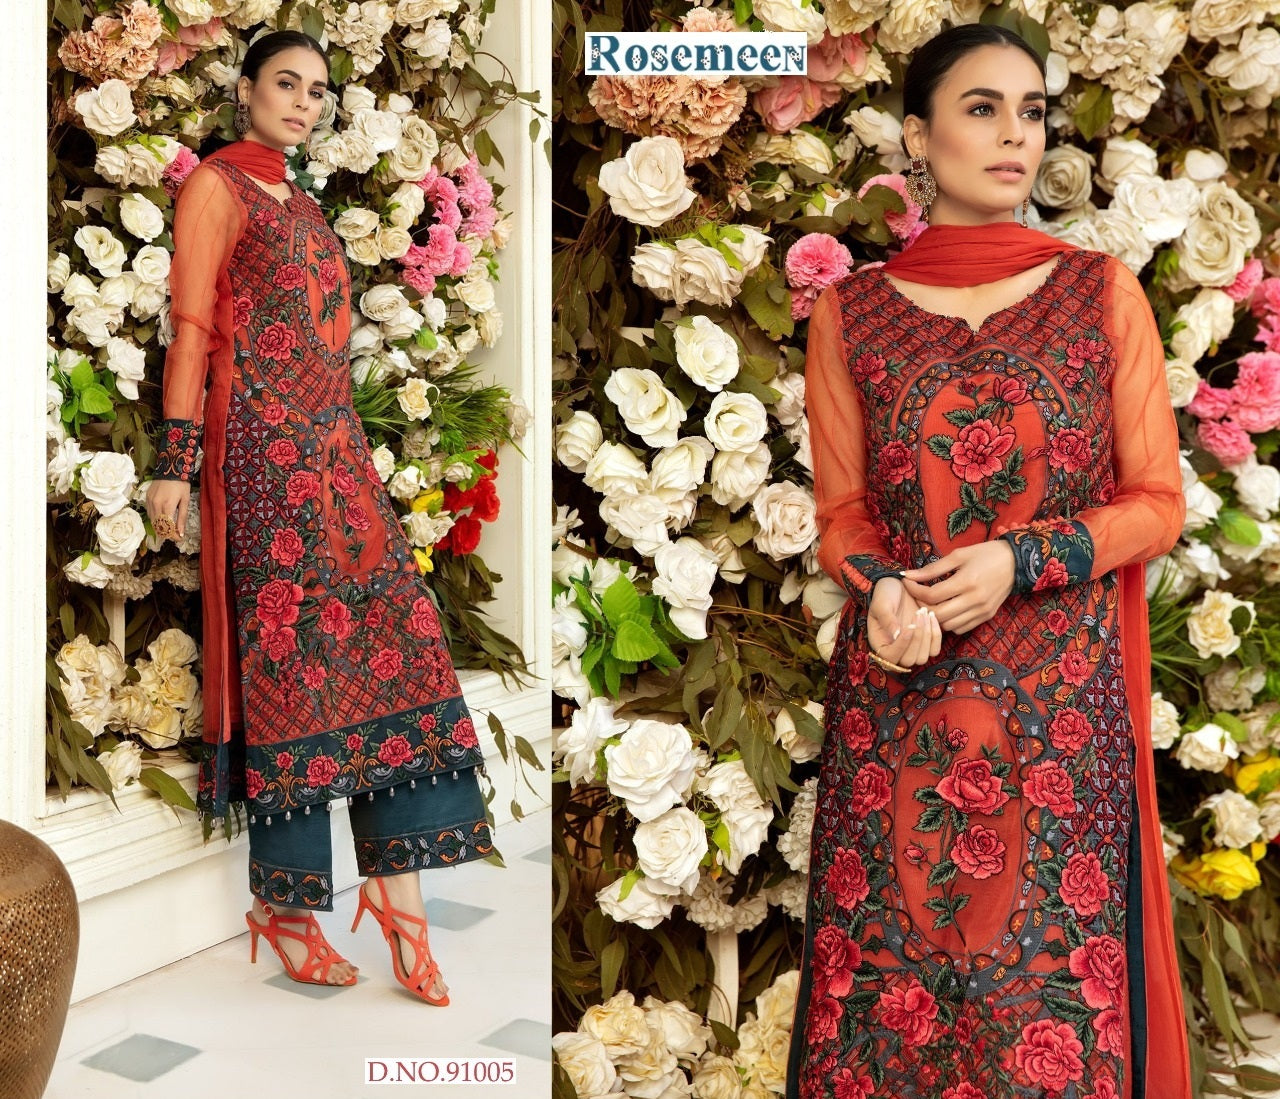 Rosemeen Pakistani Designer Hit Wedding & Party Wear Suit